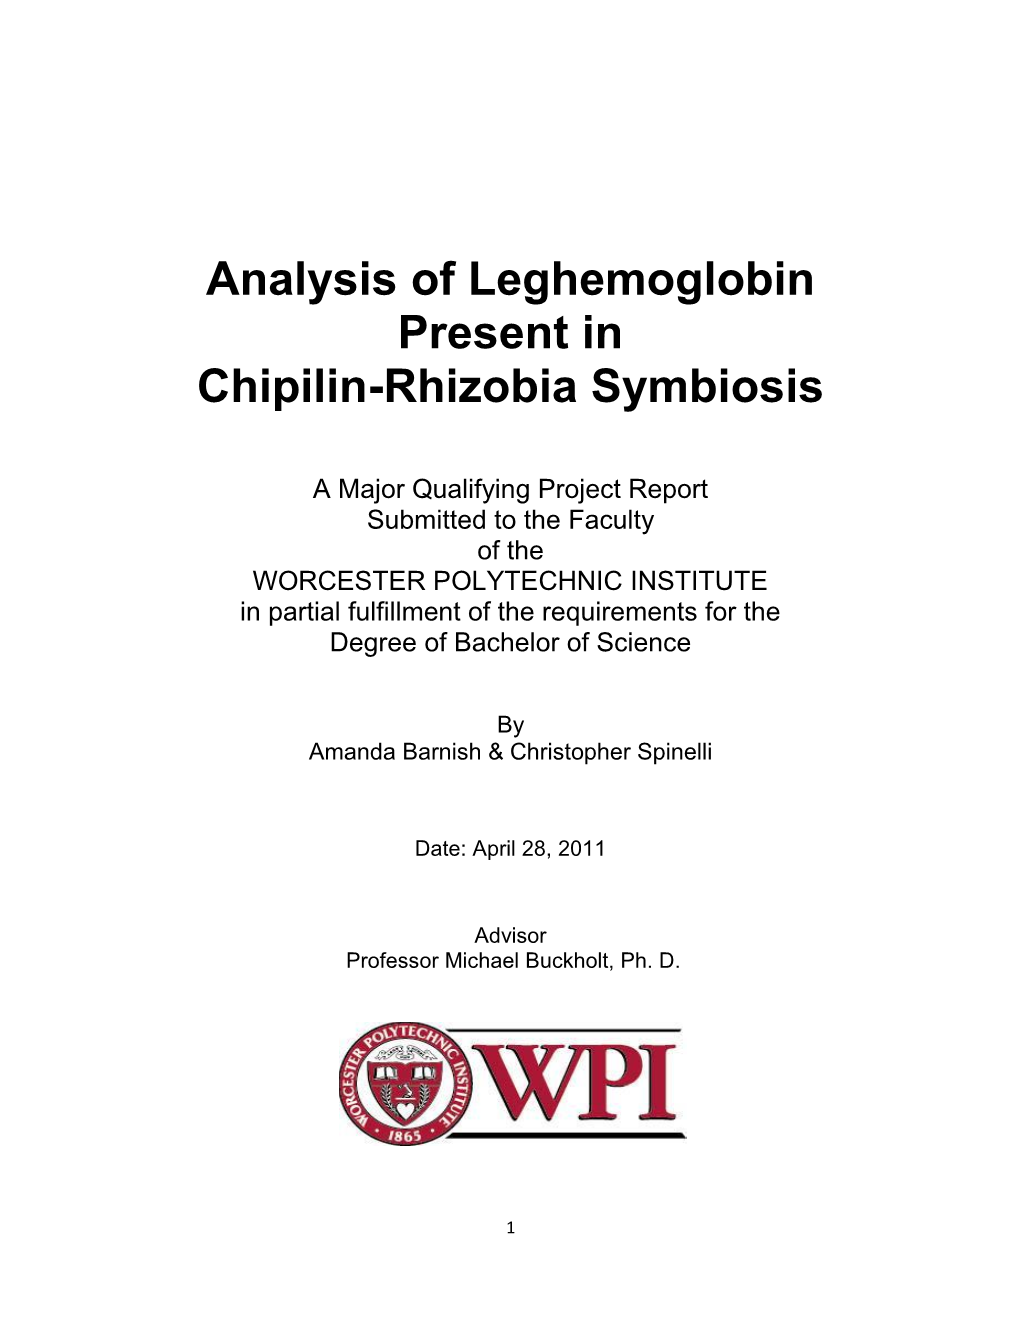 Analysis of Leghemoglobin Present in Chipilin-Rhizobia Symbiosis